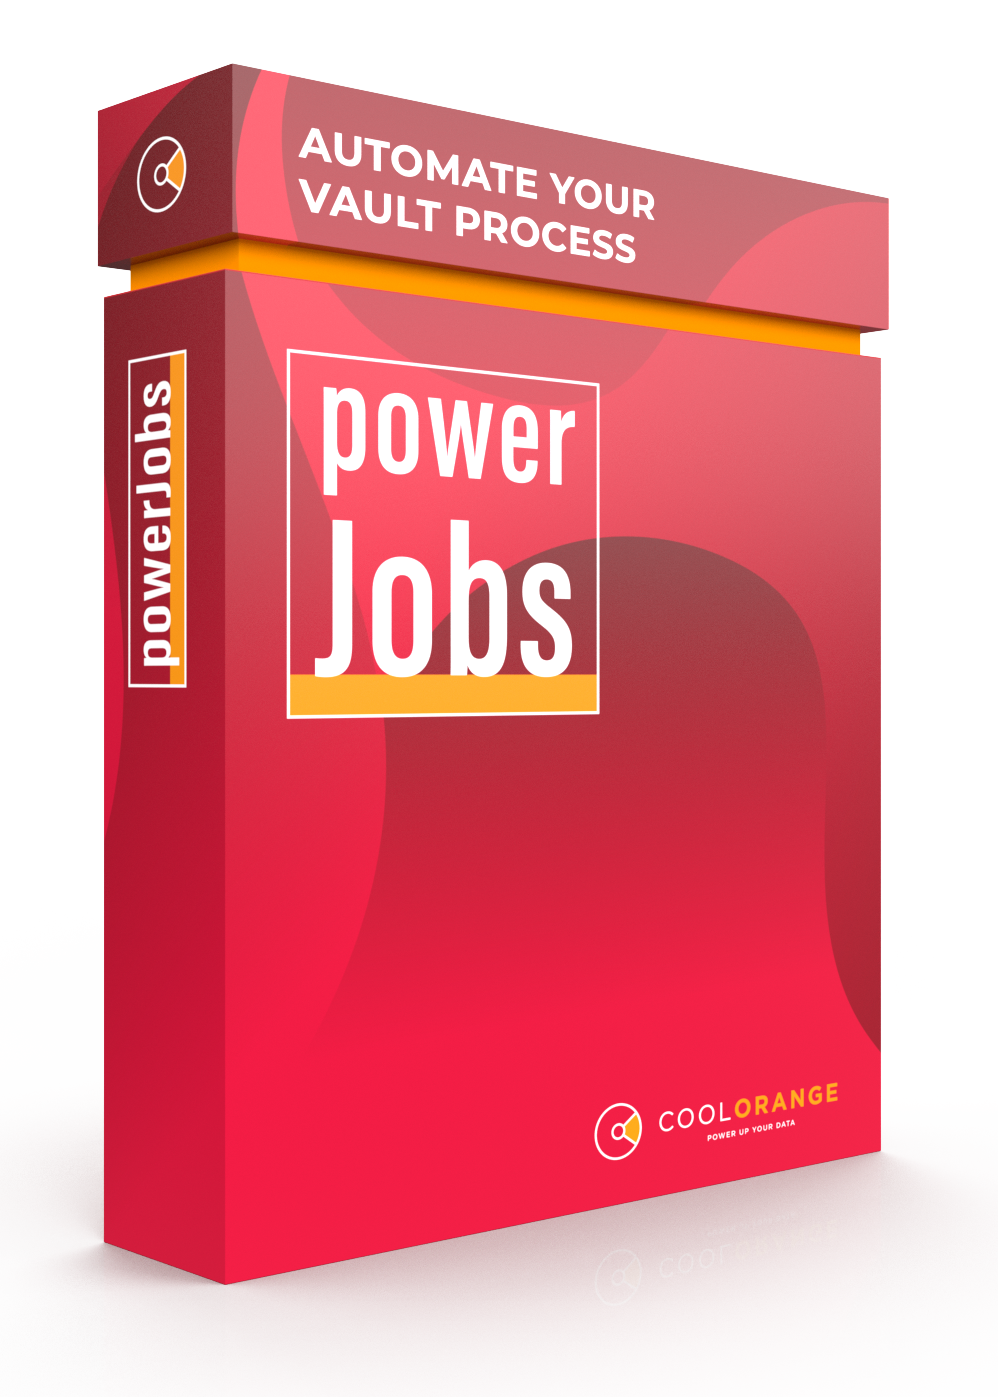 powerjobs automates autodesk vault file publishing and workflows